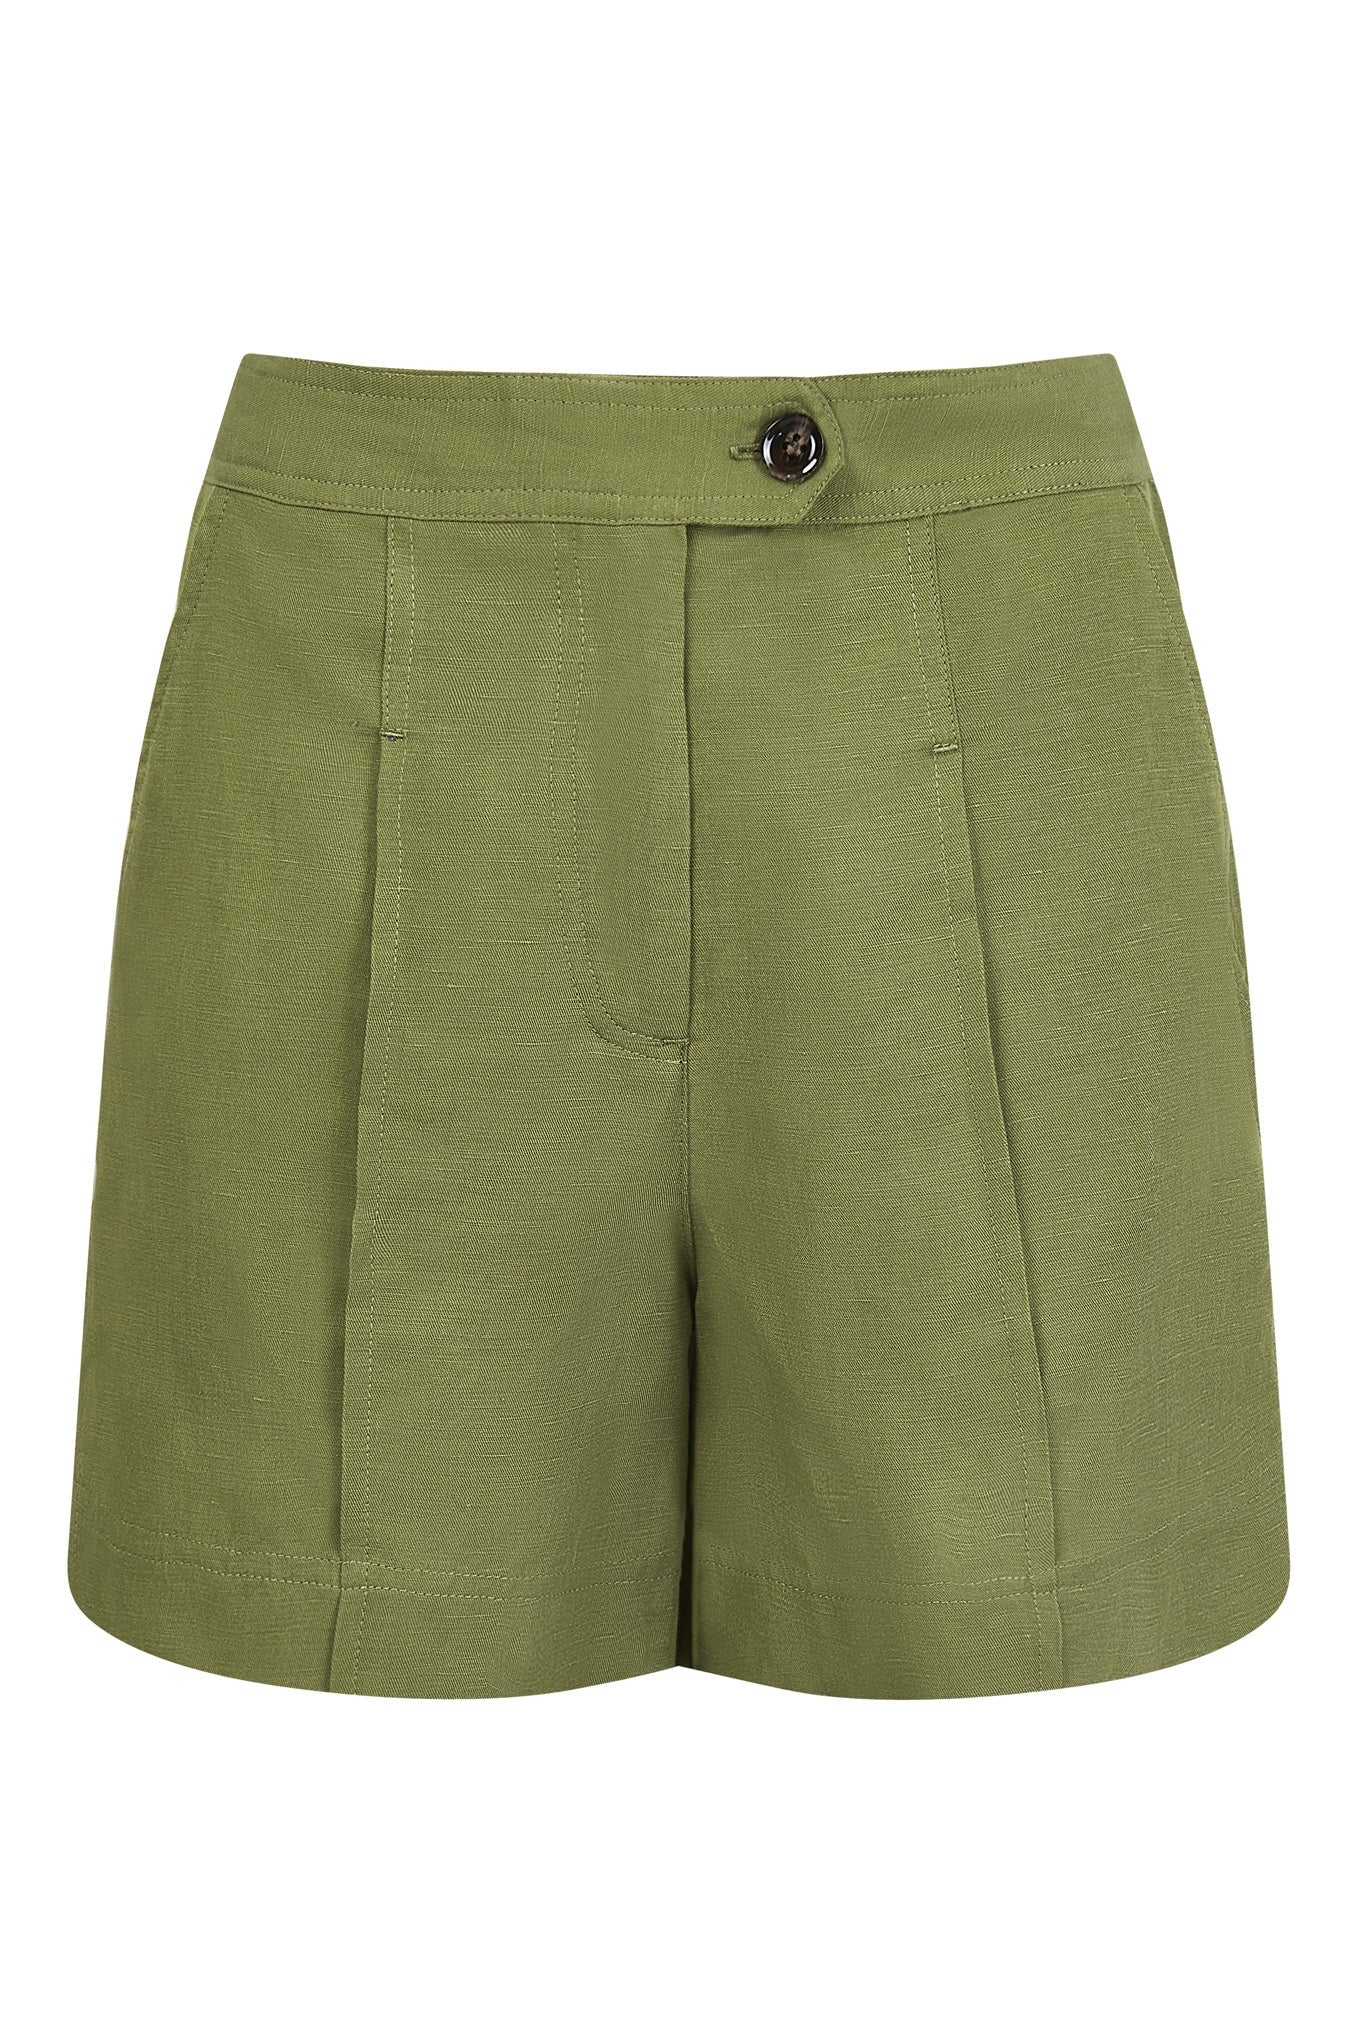 Khaki Grüne Shorts EMMIE von Komodo